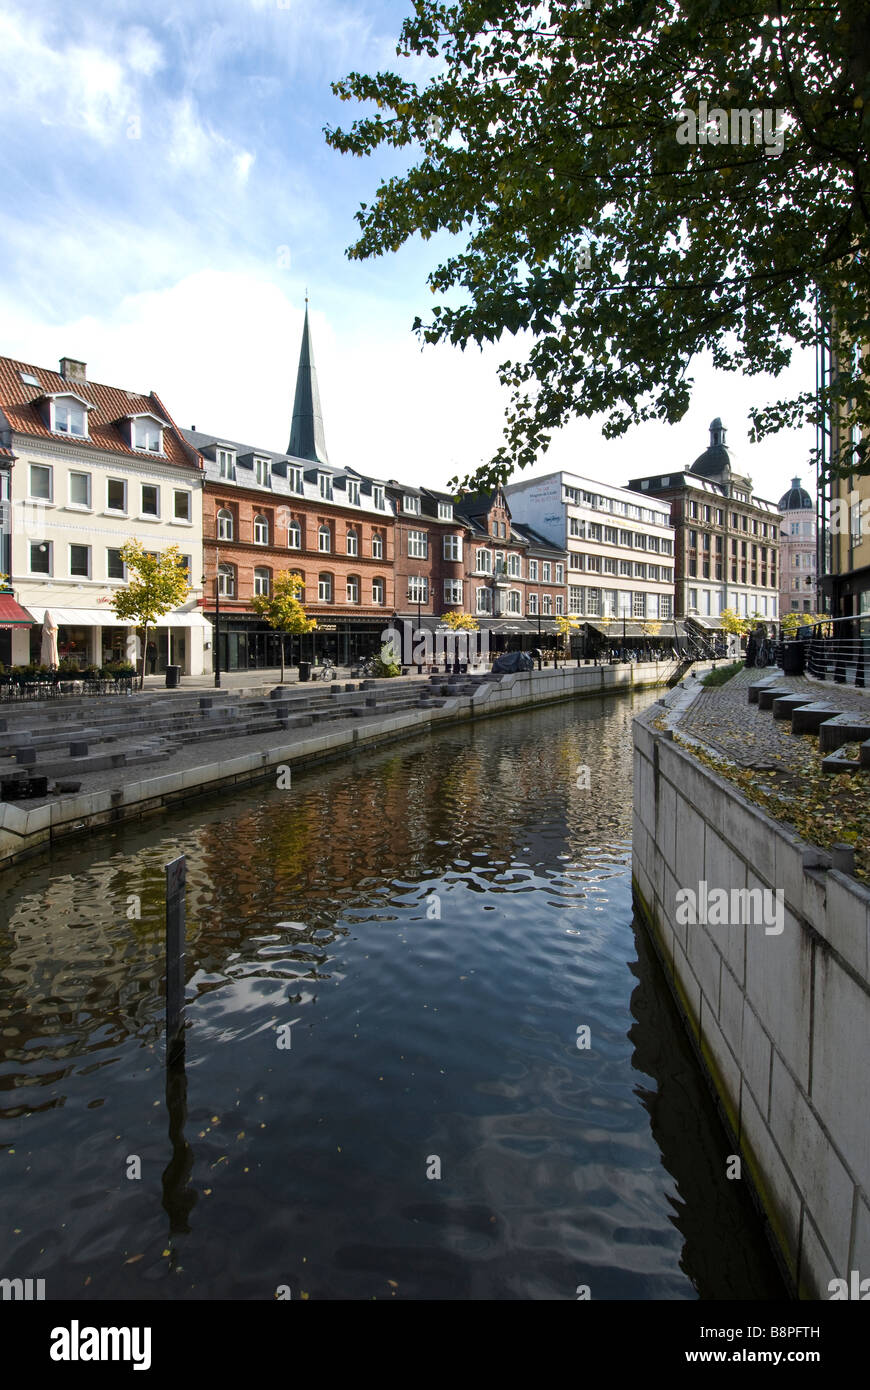 The river on Aboulevarden, Arhus, Denmark Stock Photo